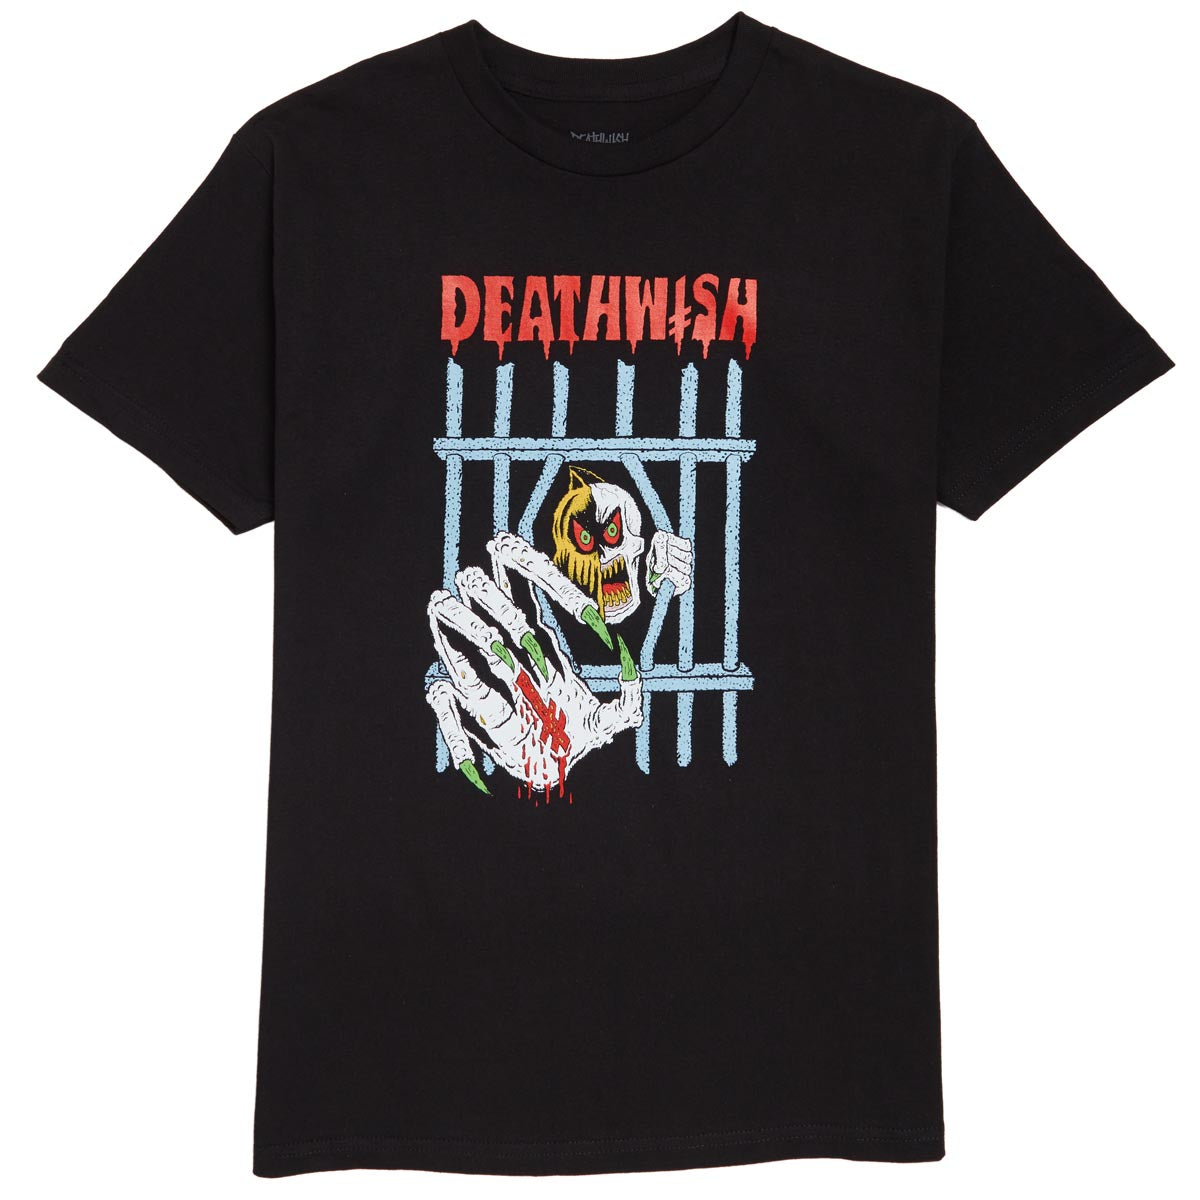 Deathwish Spookies T-Shirt - Black image 1